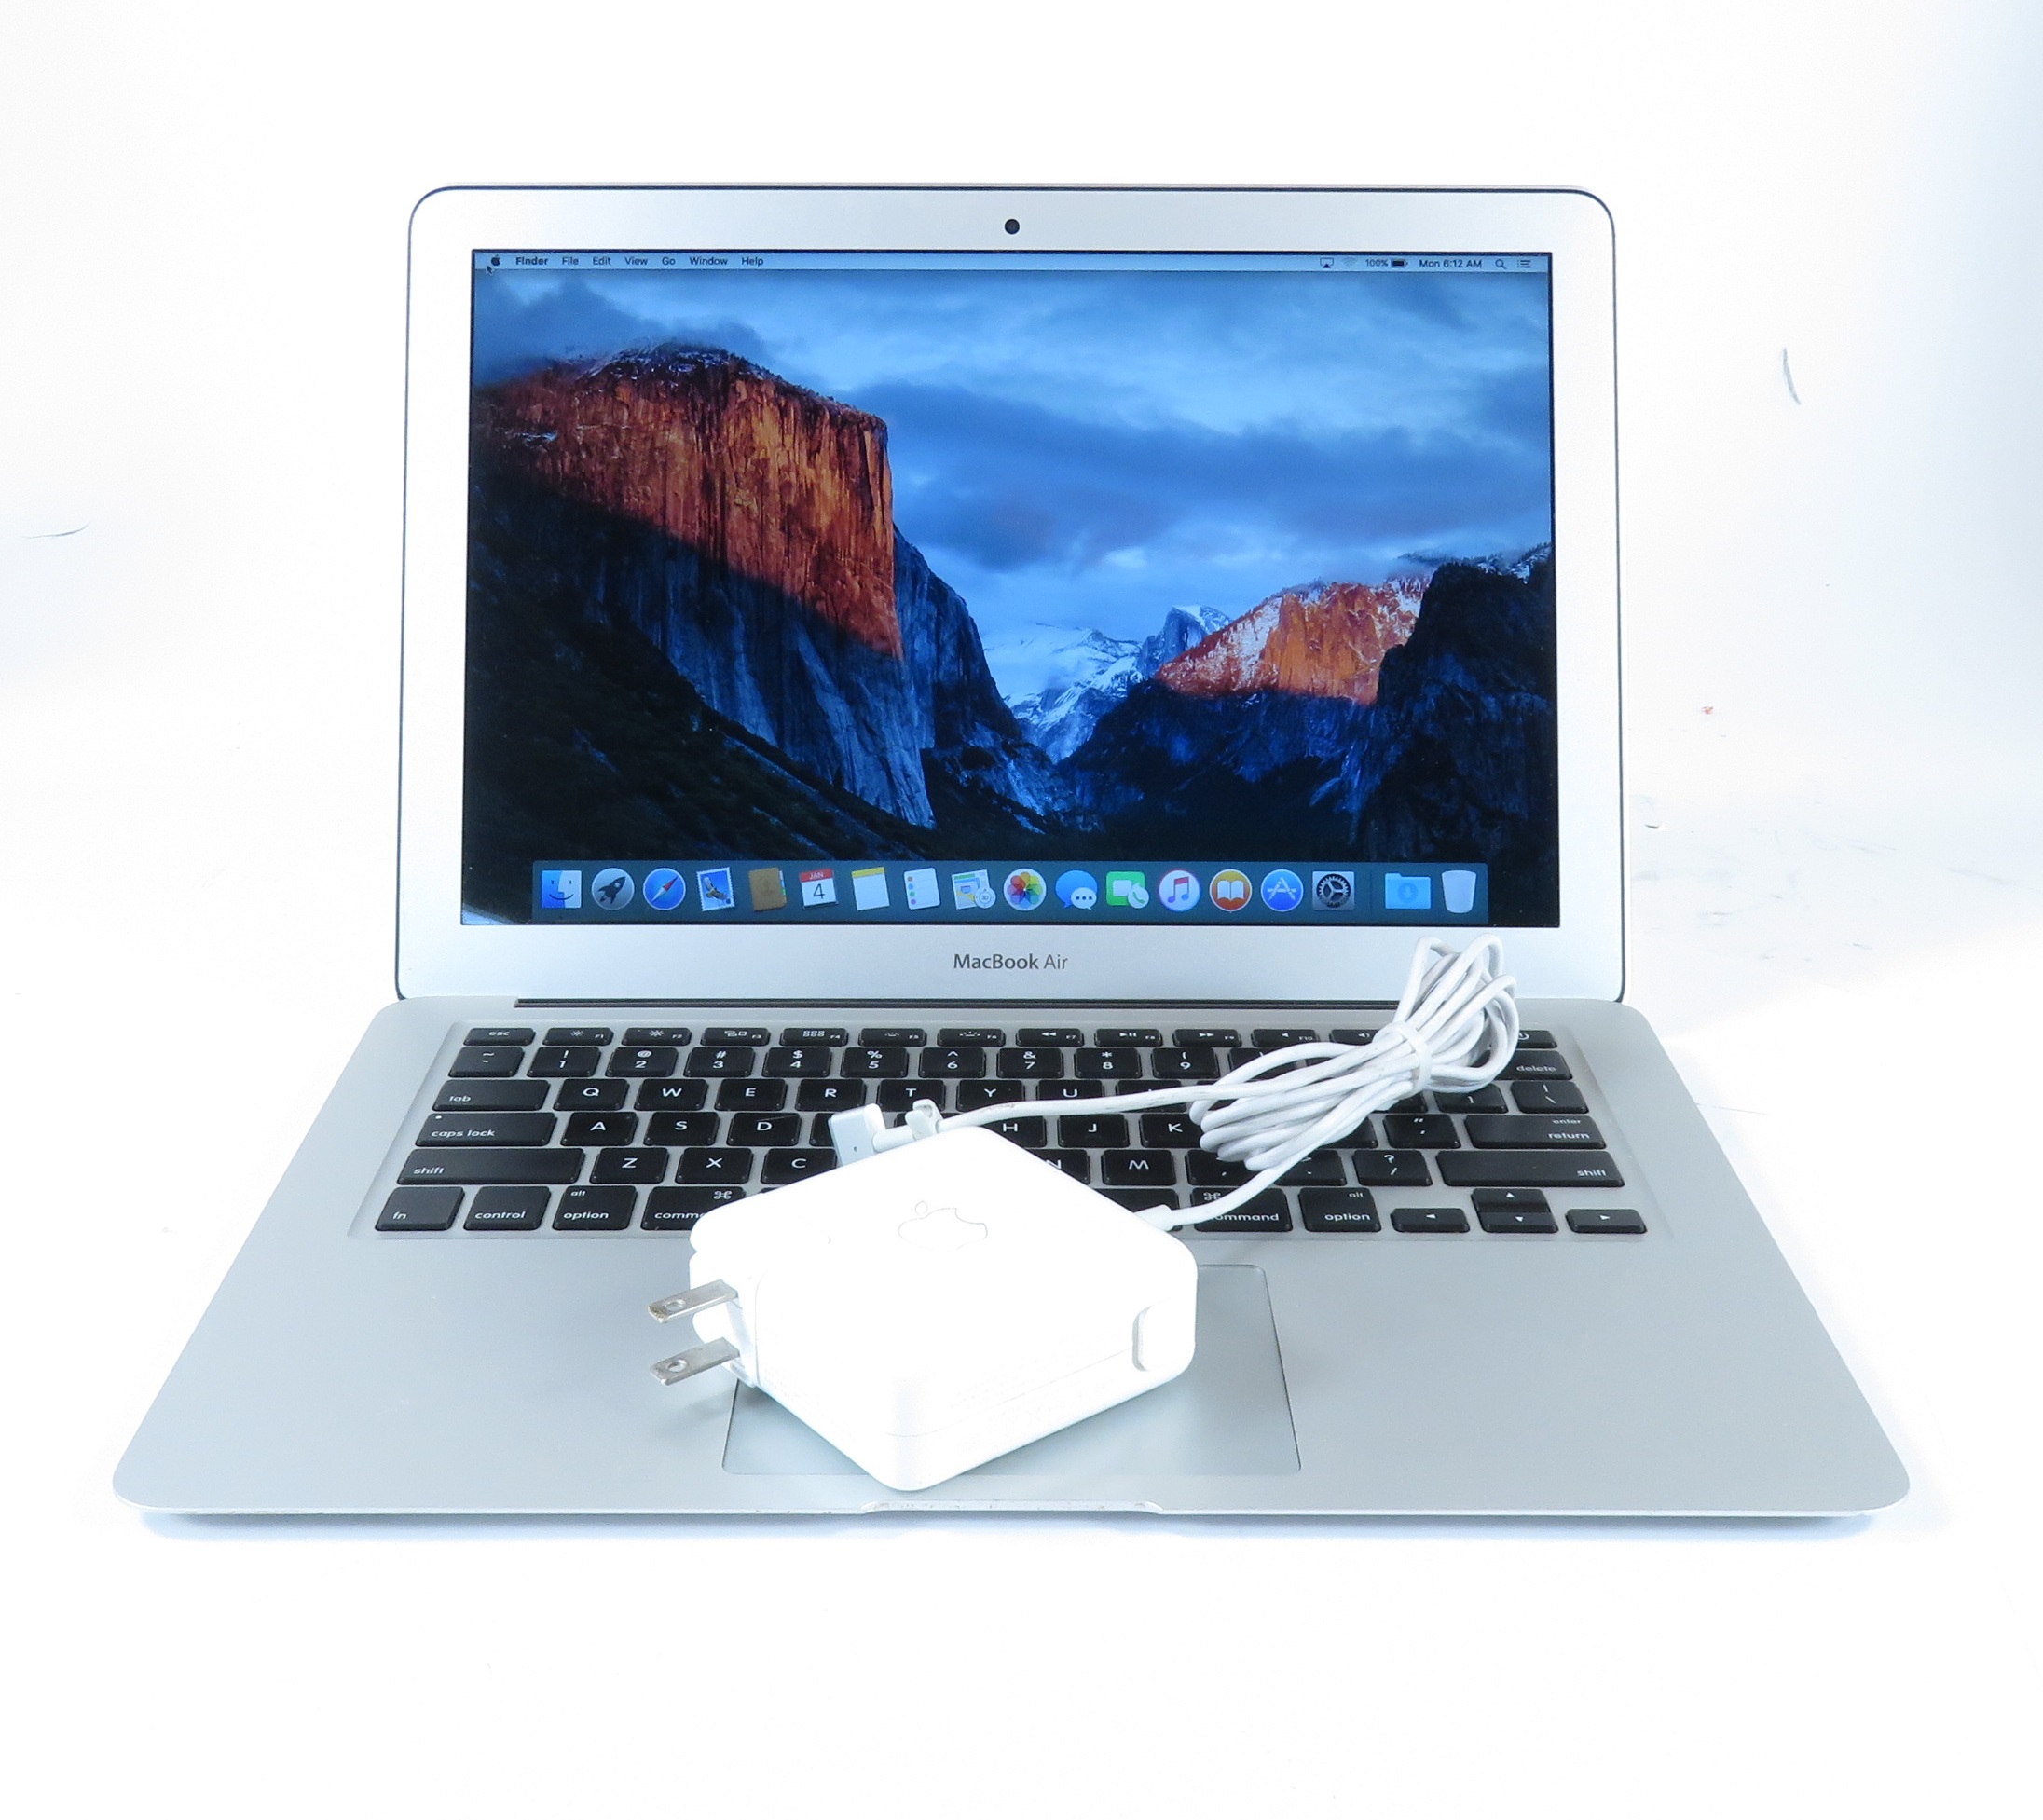 Apple MacBook Air 2015 MJVE2LL/A Core i5-5250U 1.6GHz 8GB RAM